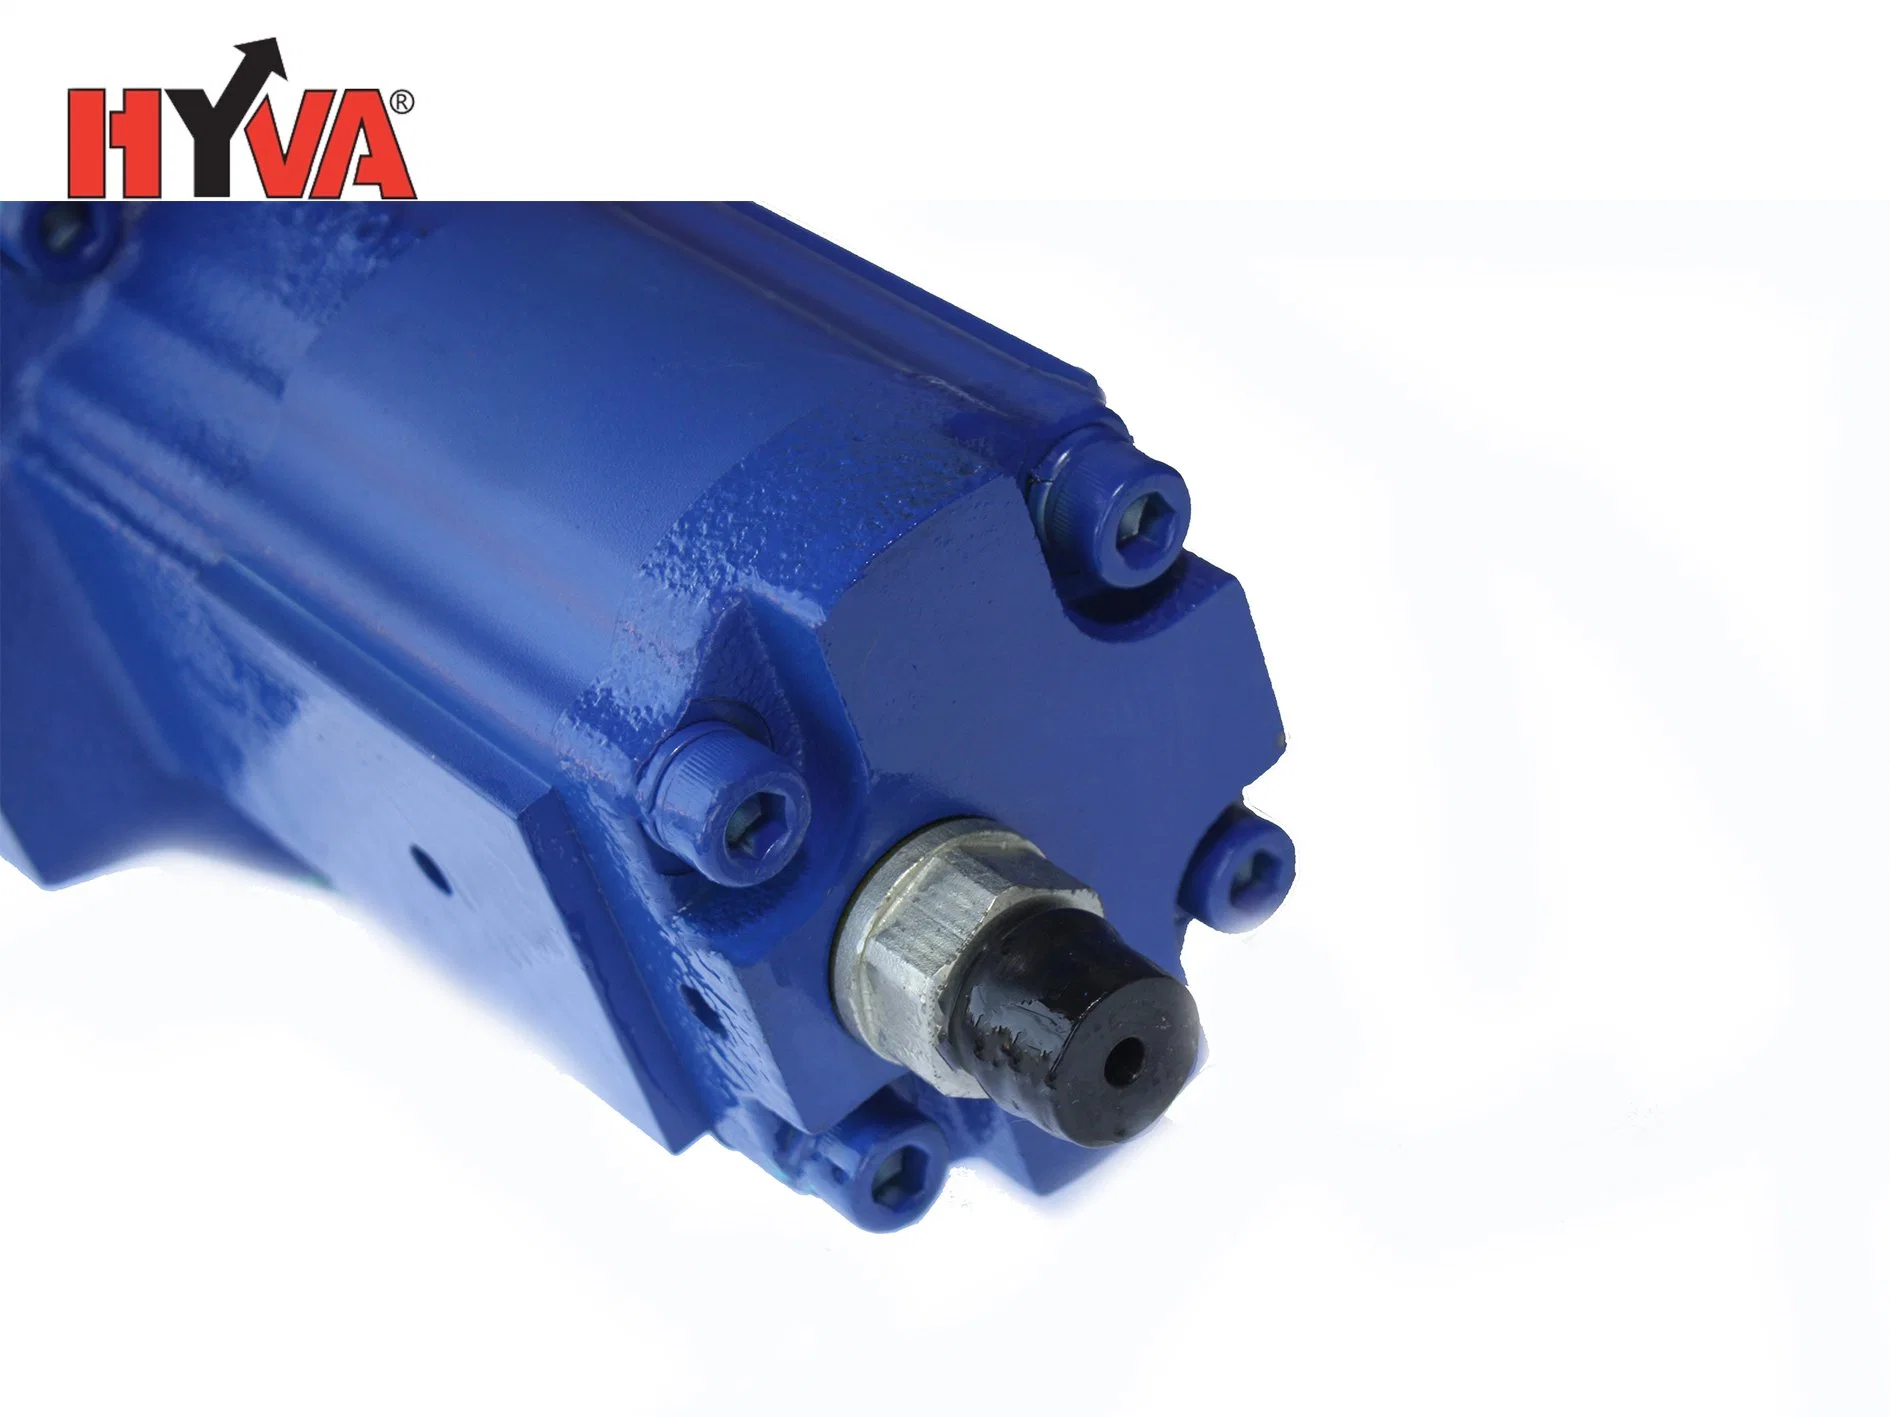 Gear Pump for Hyva Hydraulic Lift System for Tipper Truck